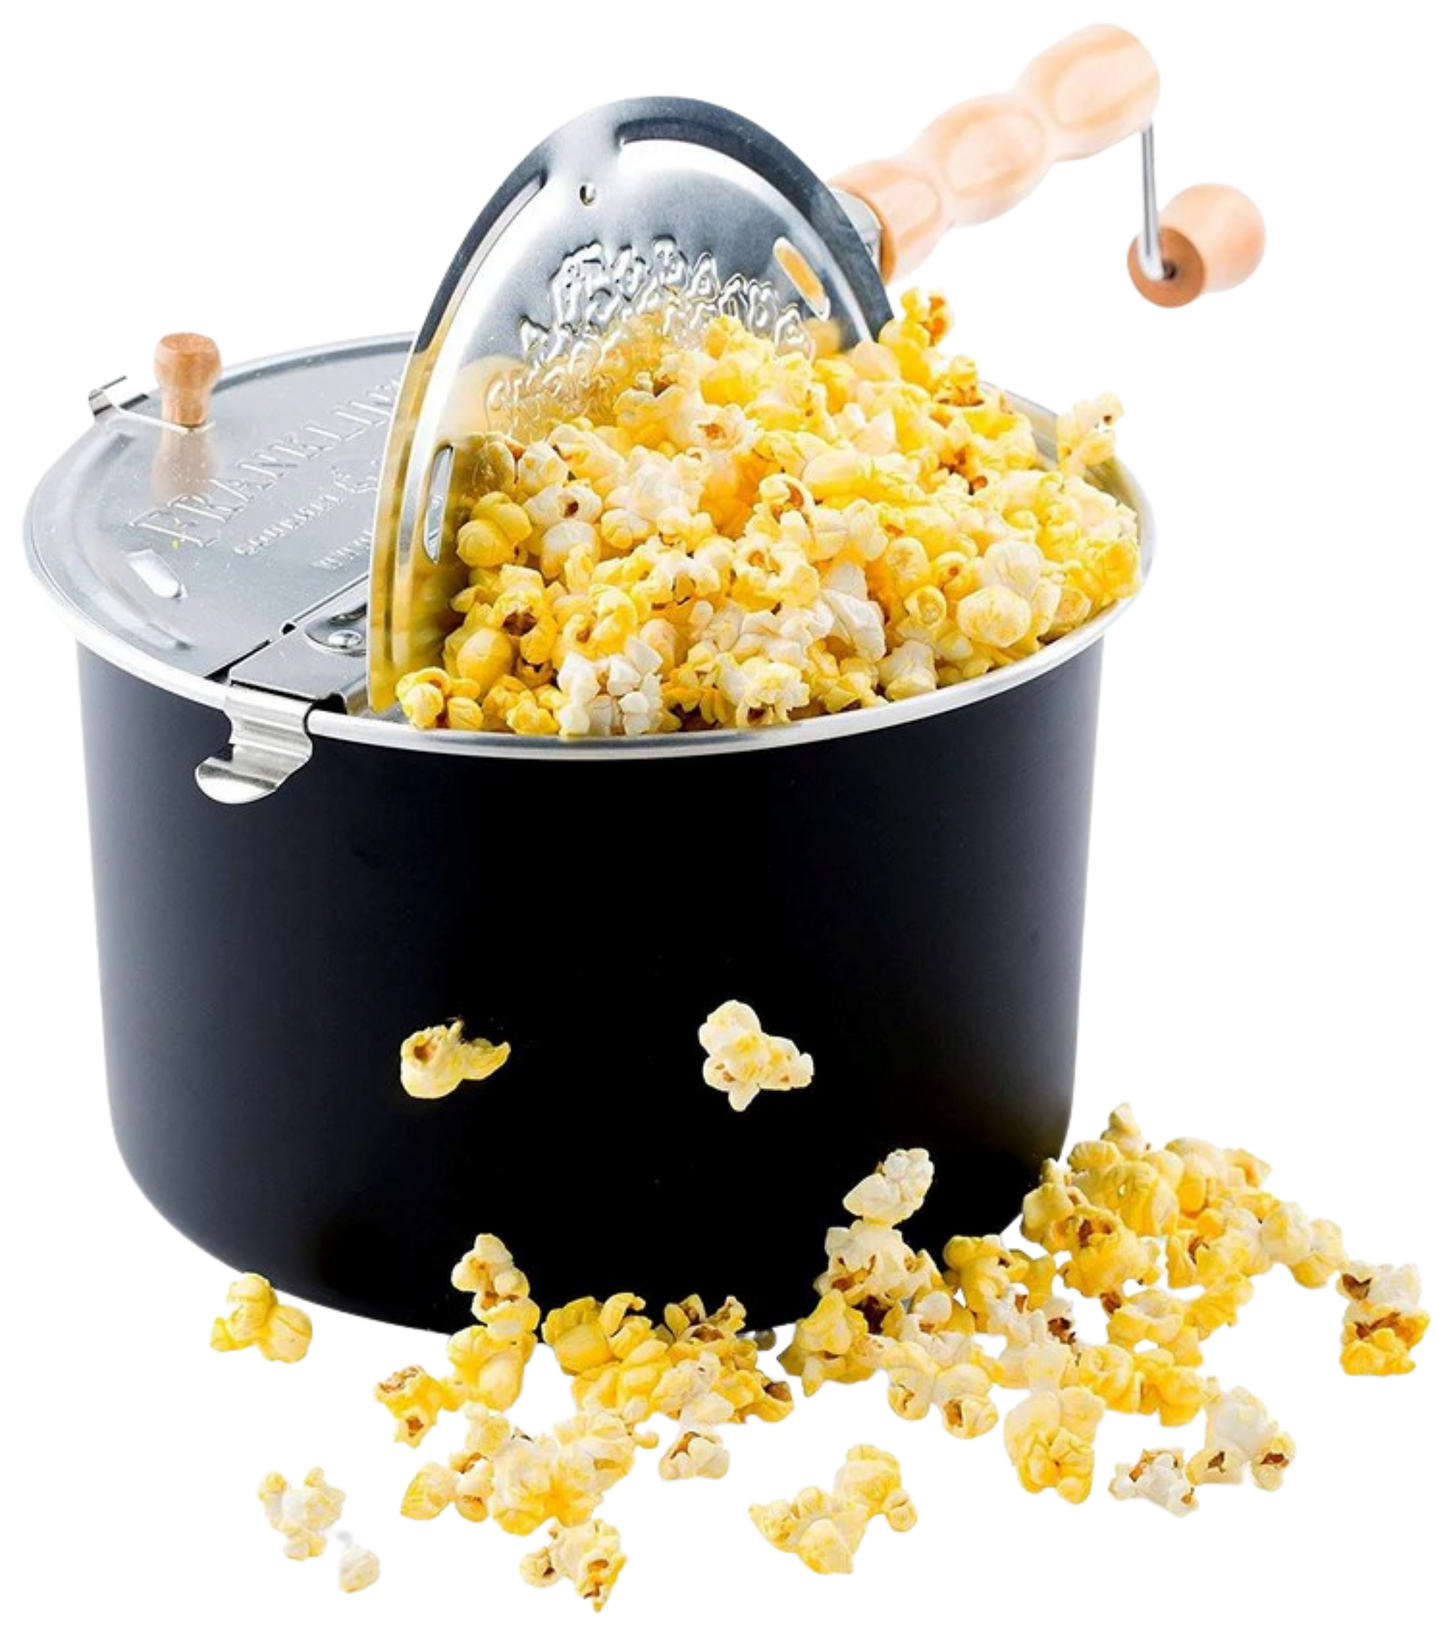 Automatic Stirring Popcorn Maker Popper, Electric Hot Oil Popcorn